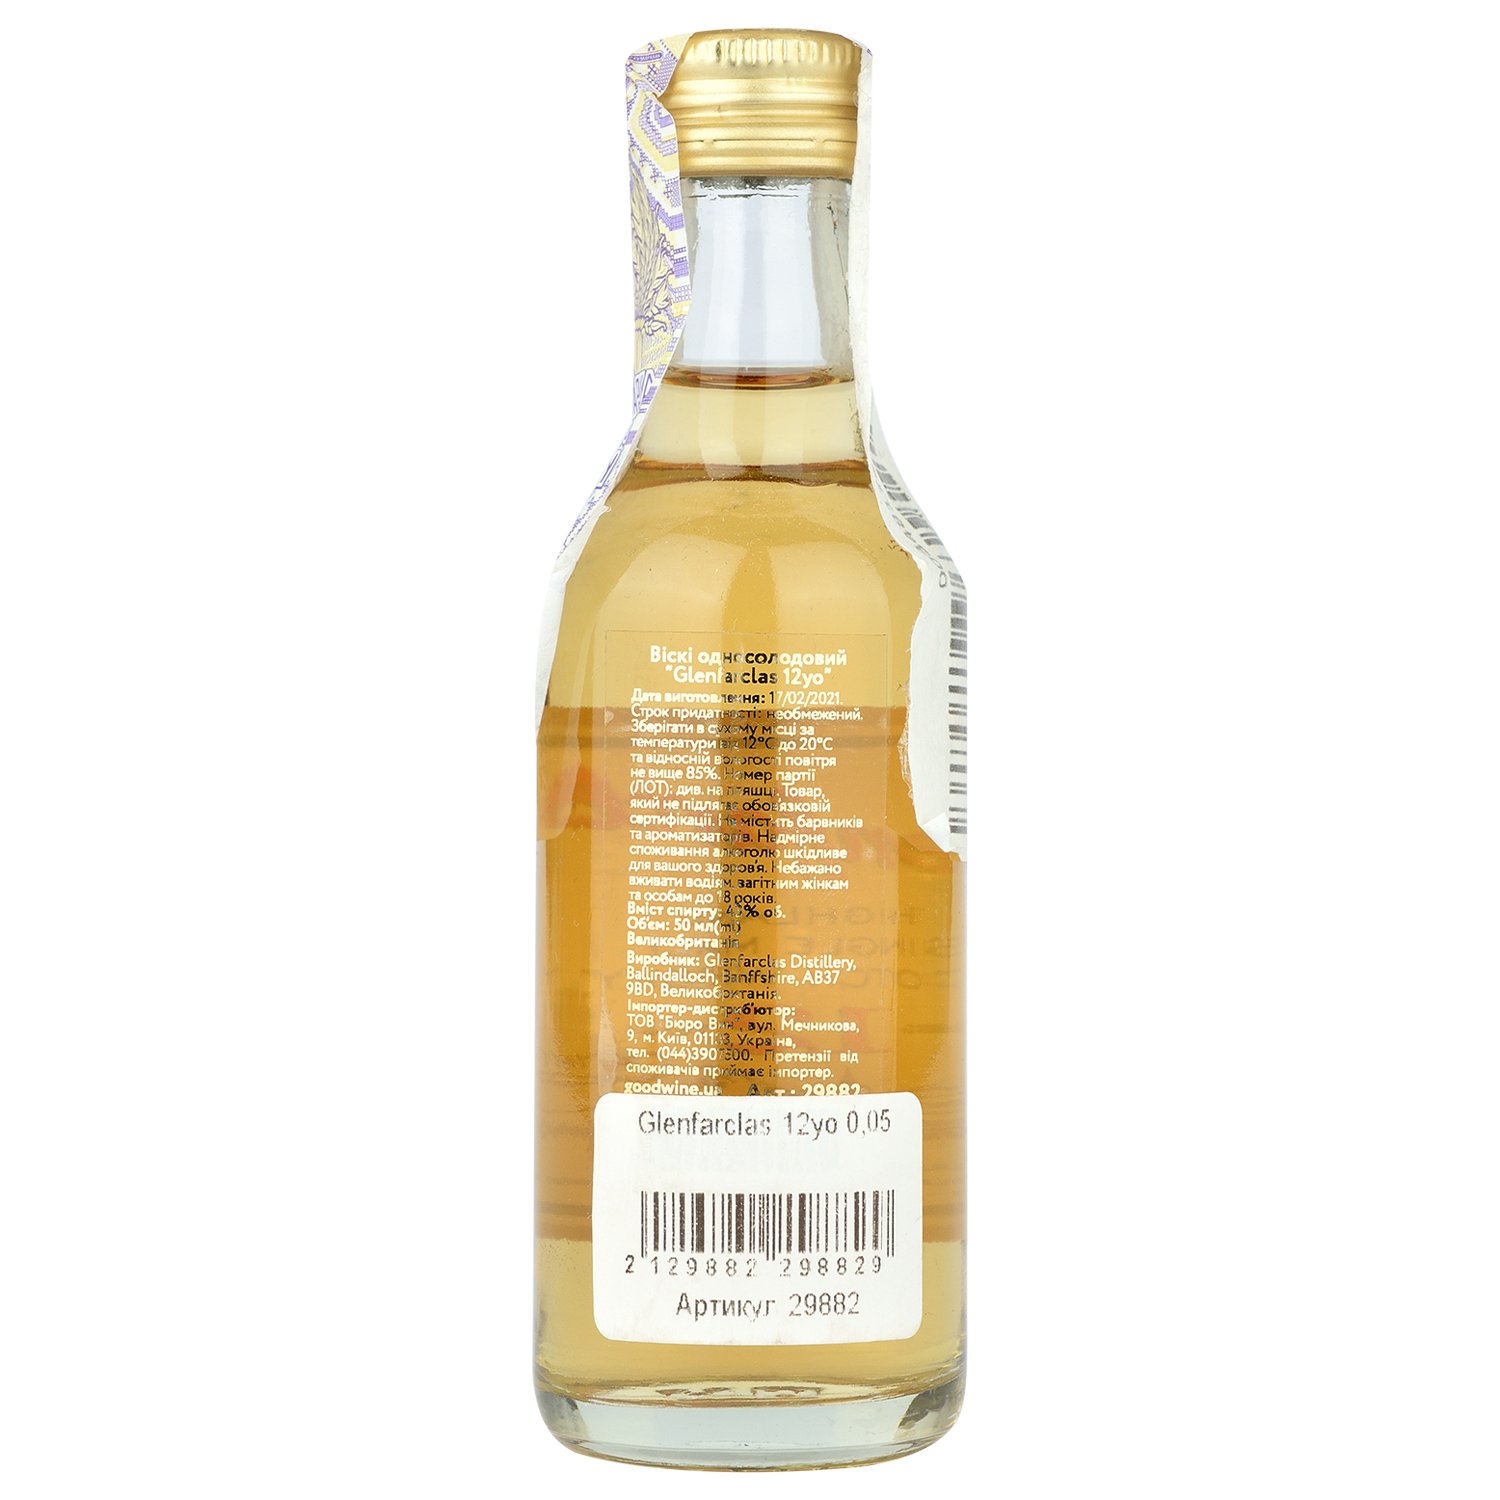 Виски Glenfarclas Single Malt Scotch Whisky 12 yo, 43%, 0,05 л - фото 2